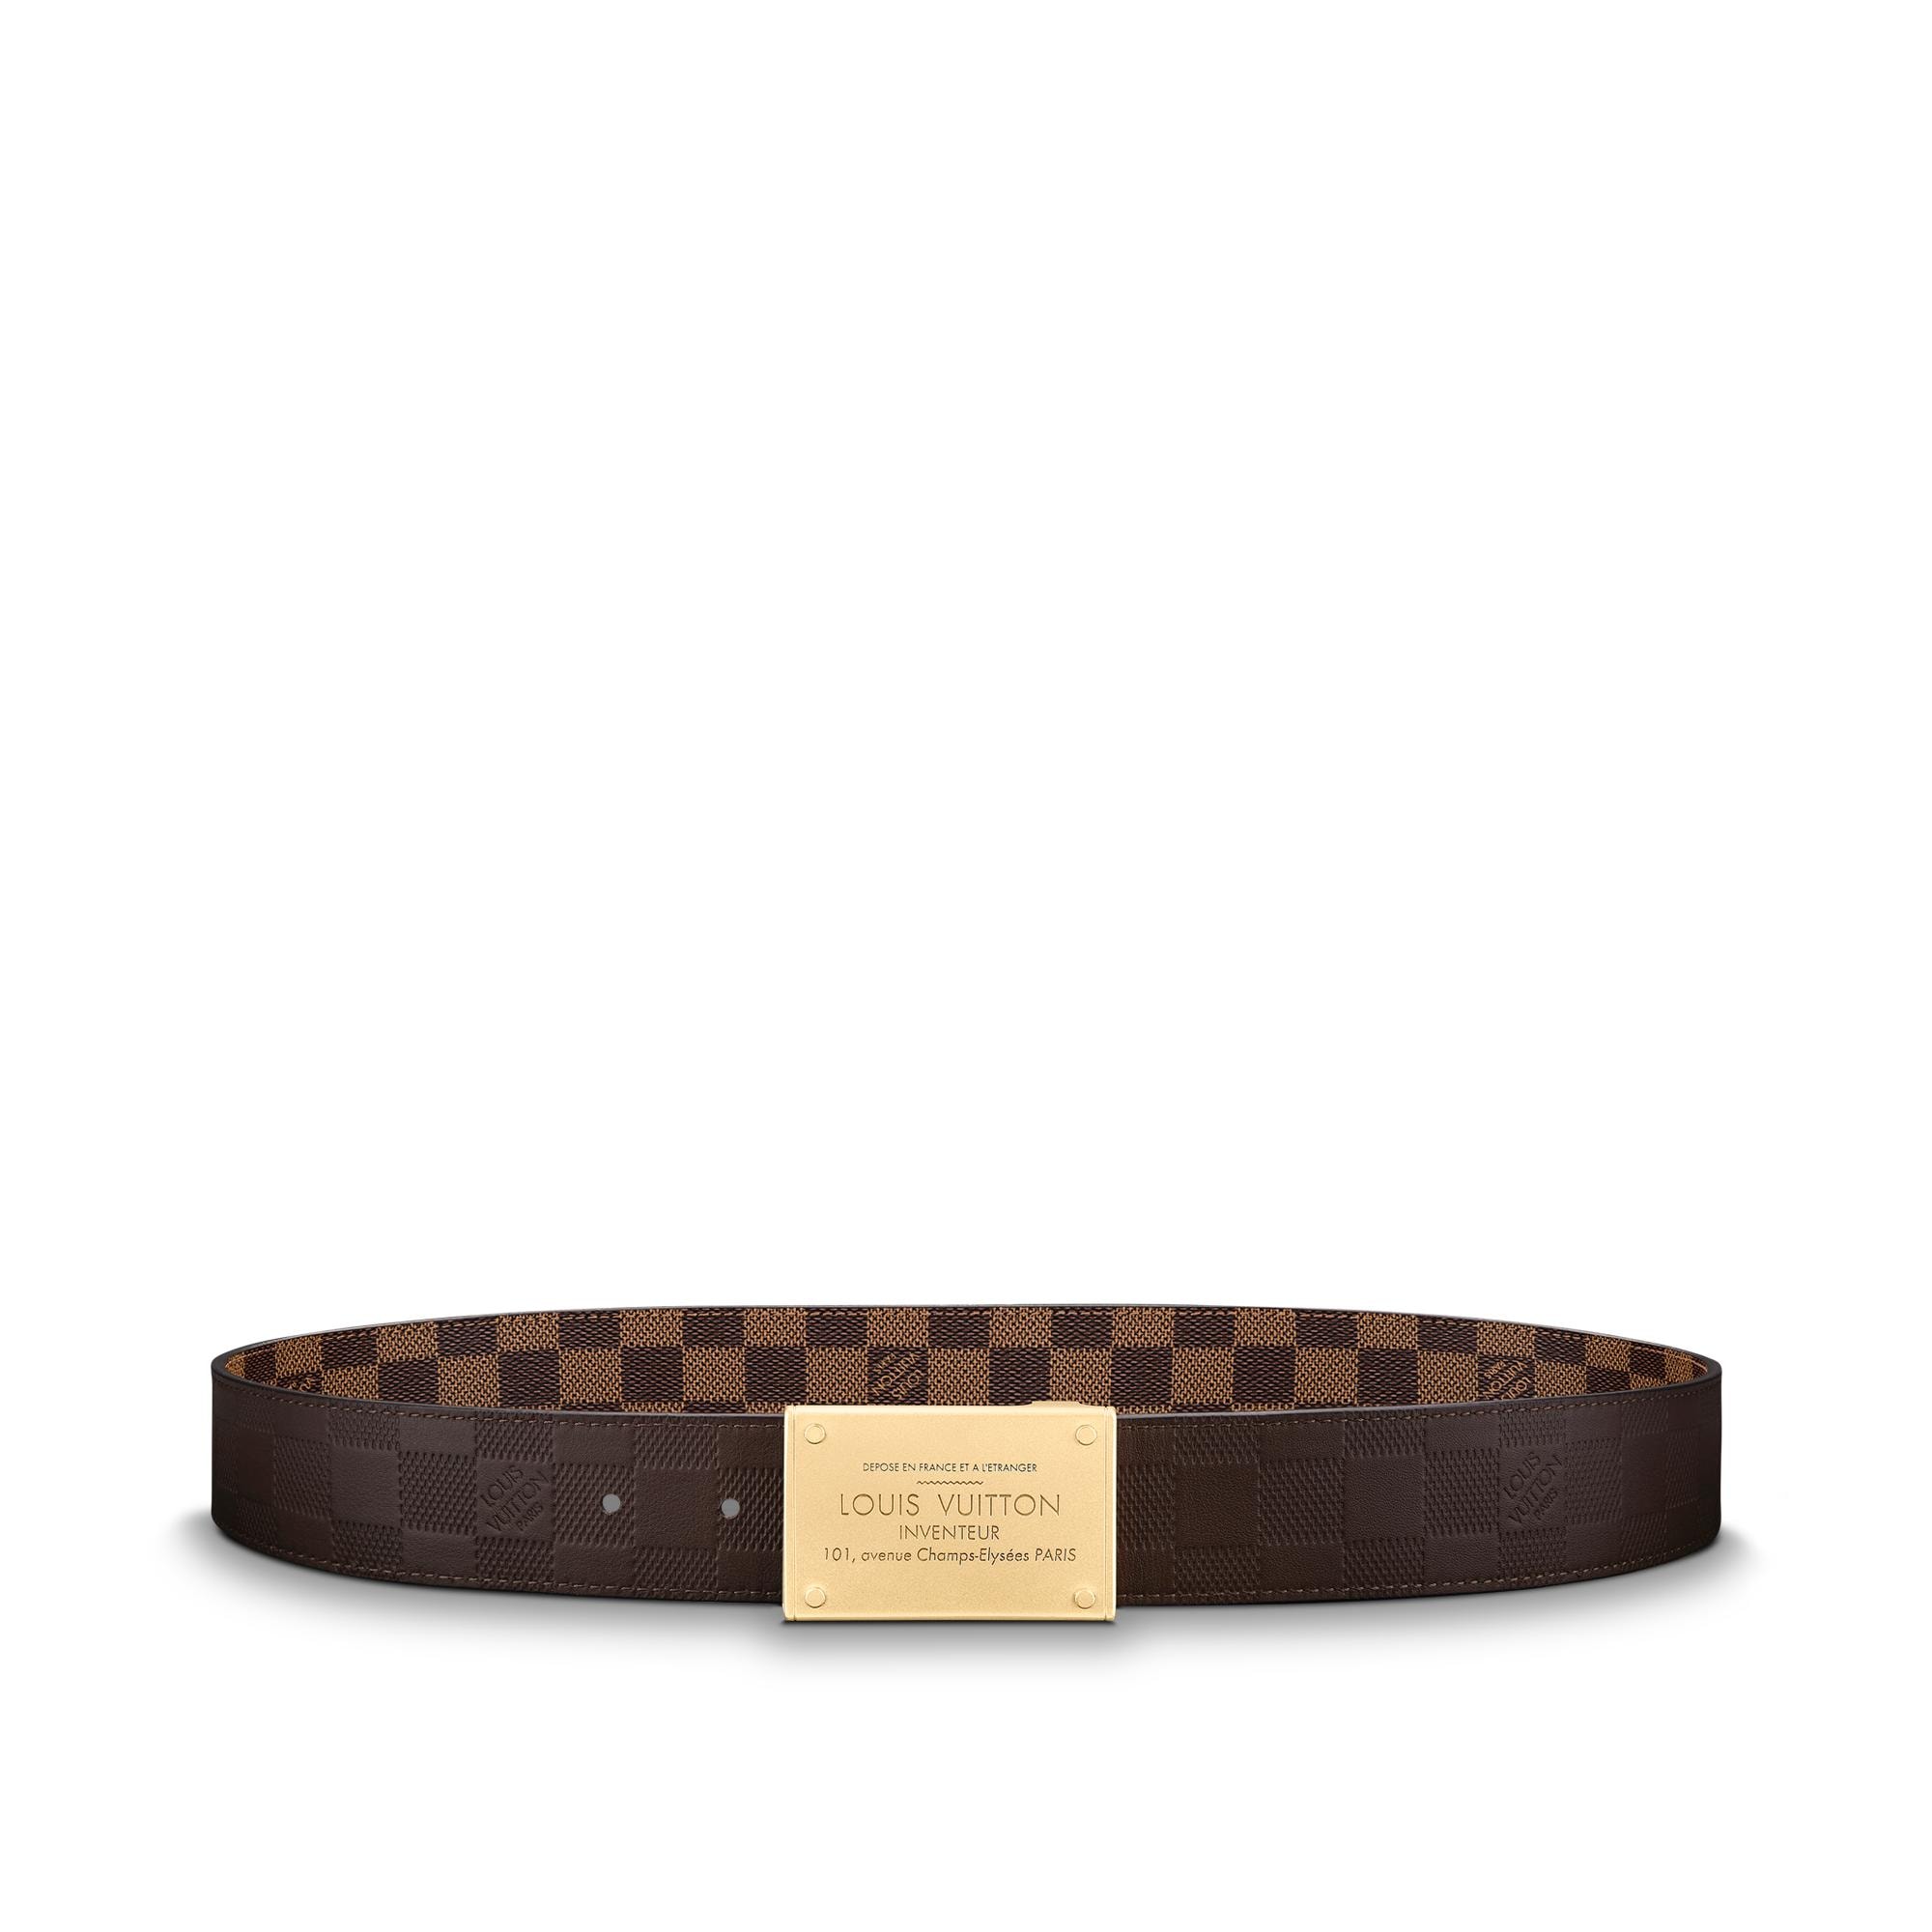 Louis Vuitton Inventeur Belt Damier Medium Brown 916312